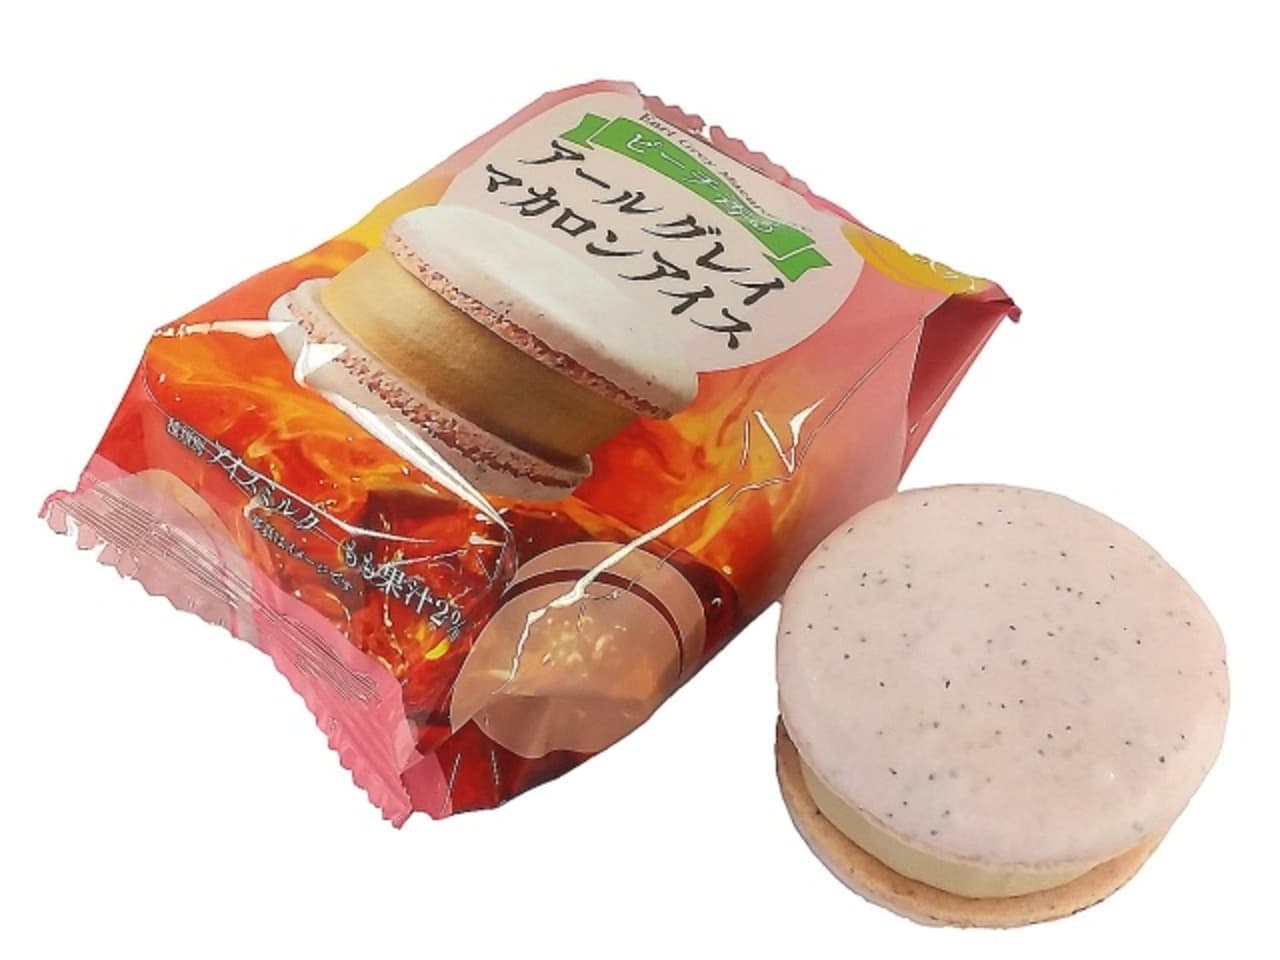 7-ELEVEN "Akagi Peach-Scented Earl Grey Macaroon Ice Cream